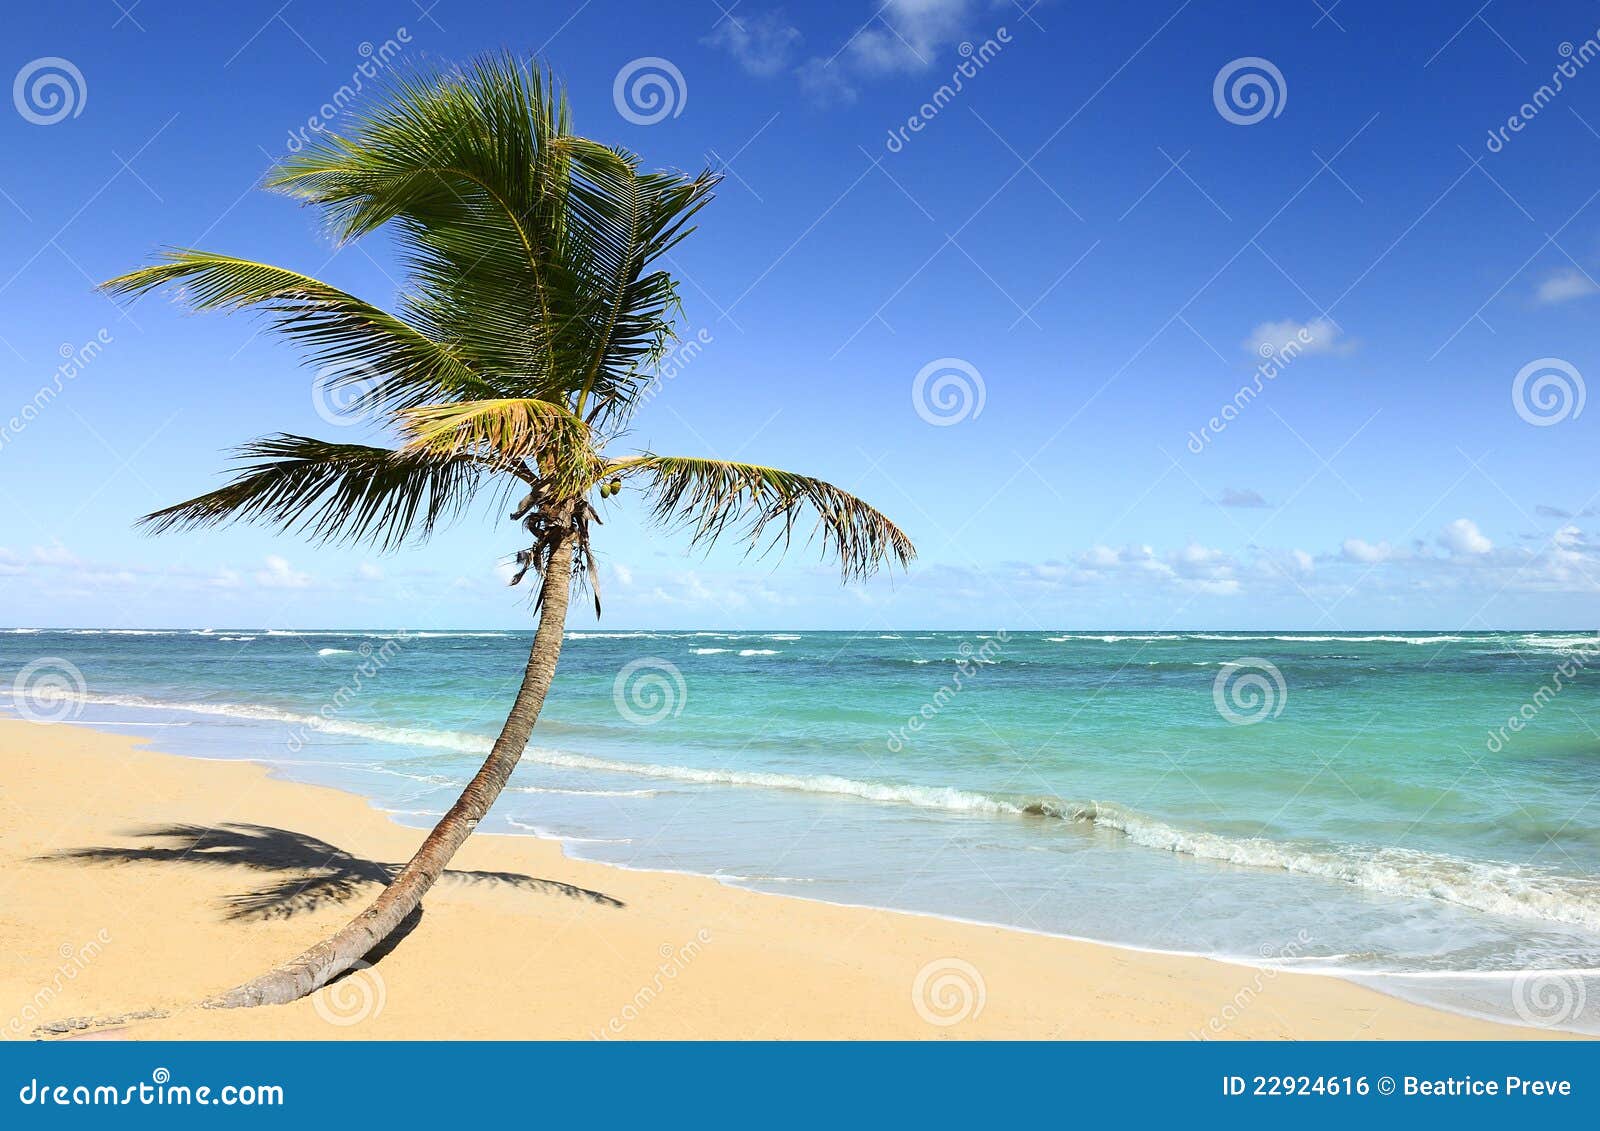 Tropical beach stock photo. Image of seascape, coconut - 22924616